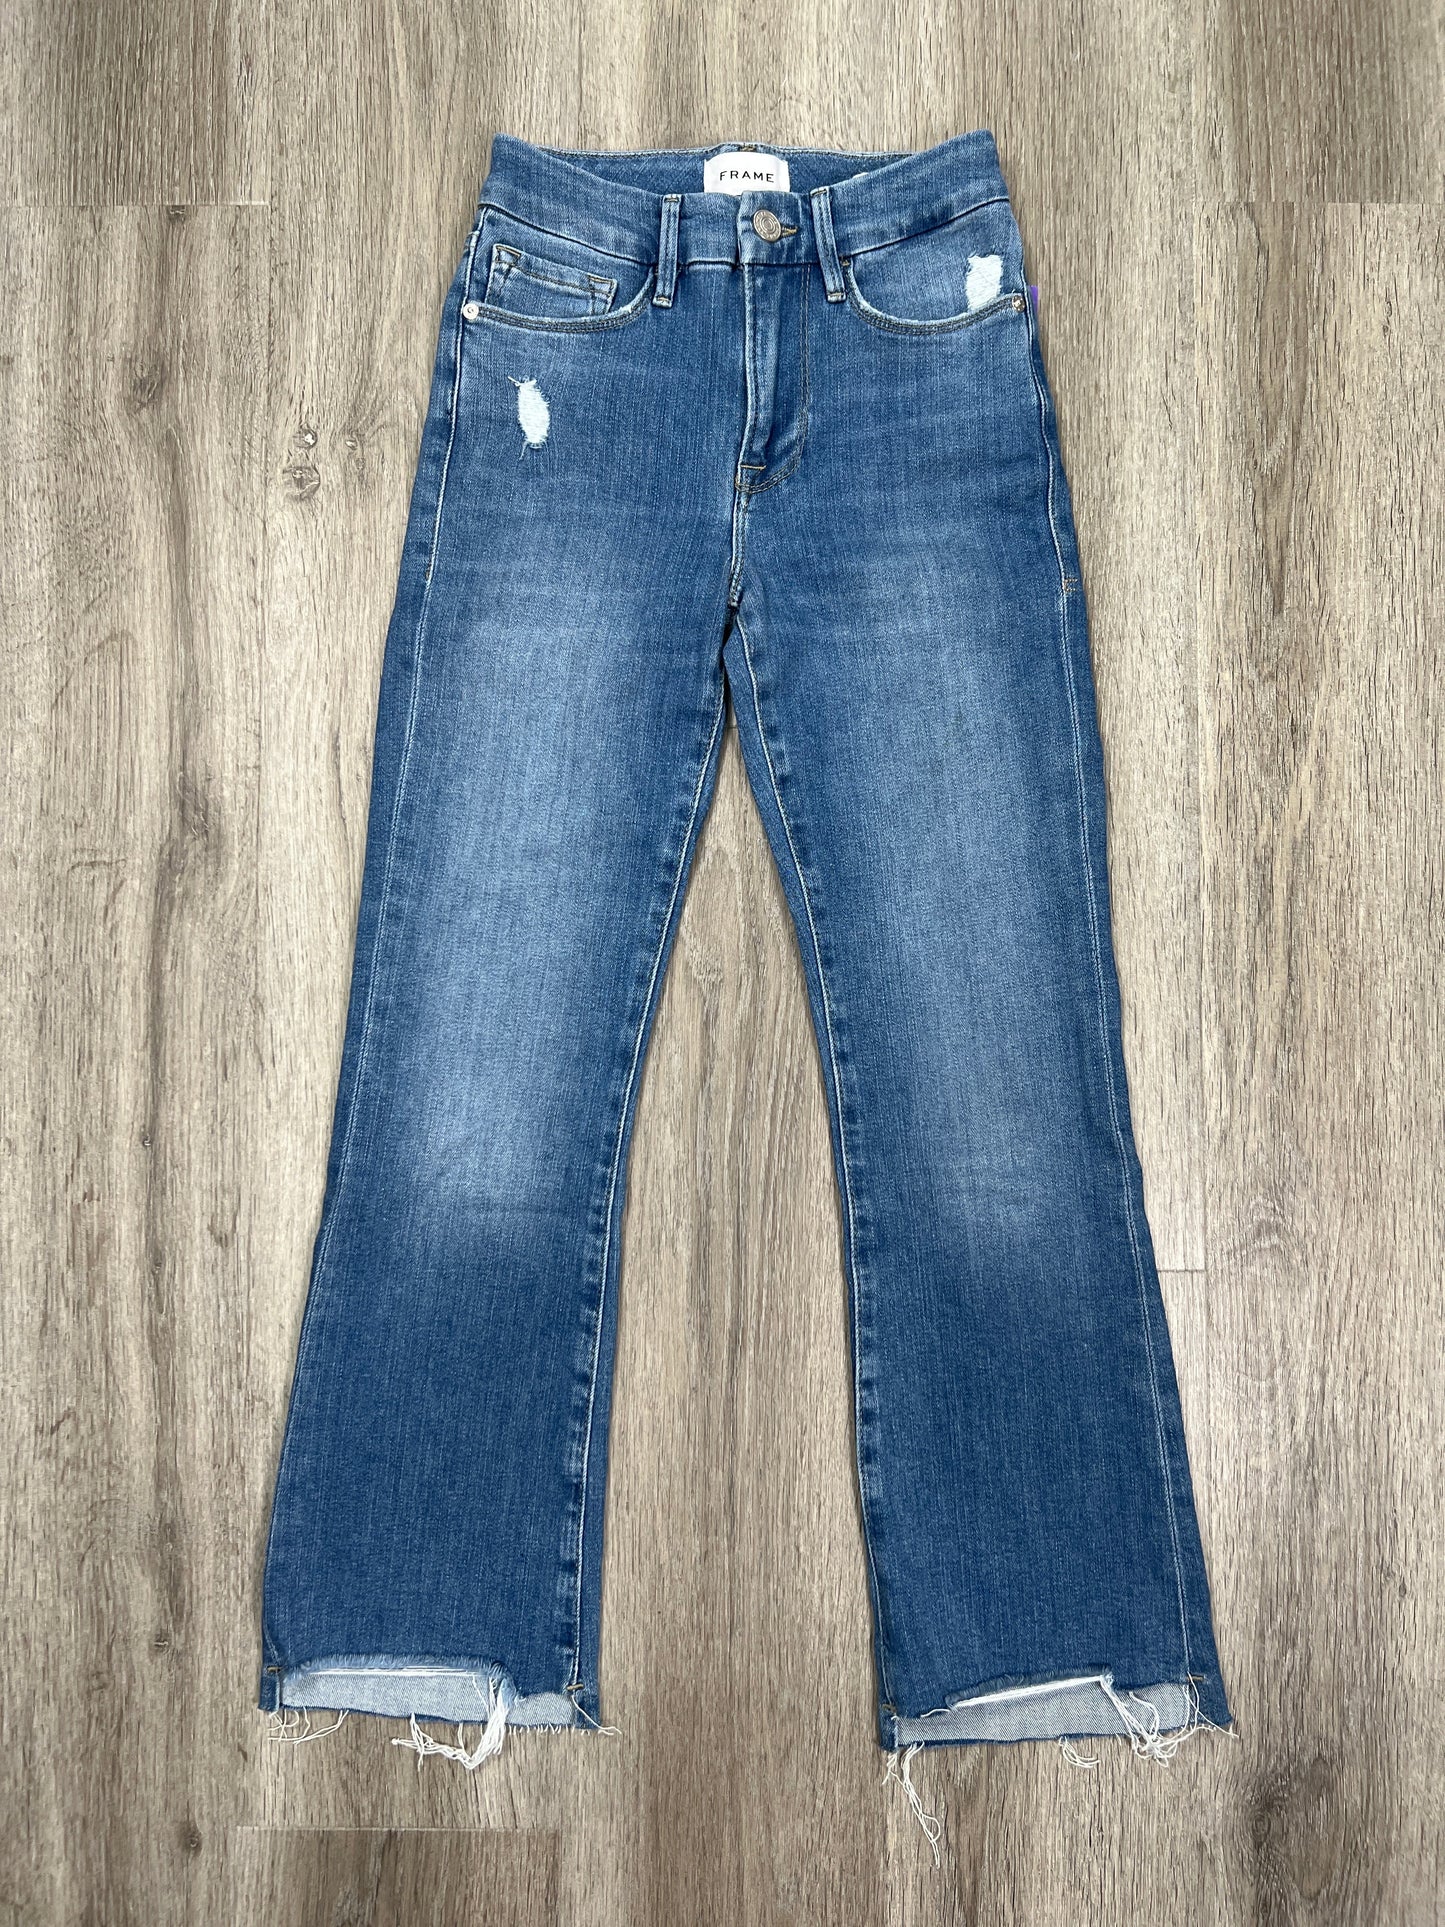 Blue Denim Jeans Boot Cut Frame, Size 00